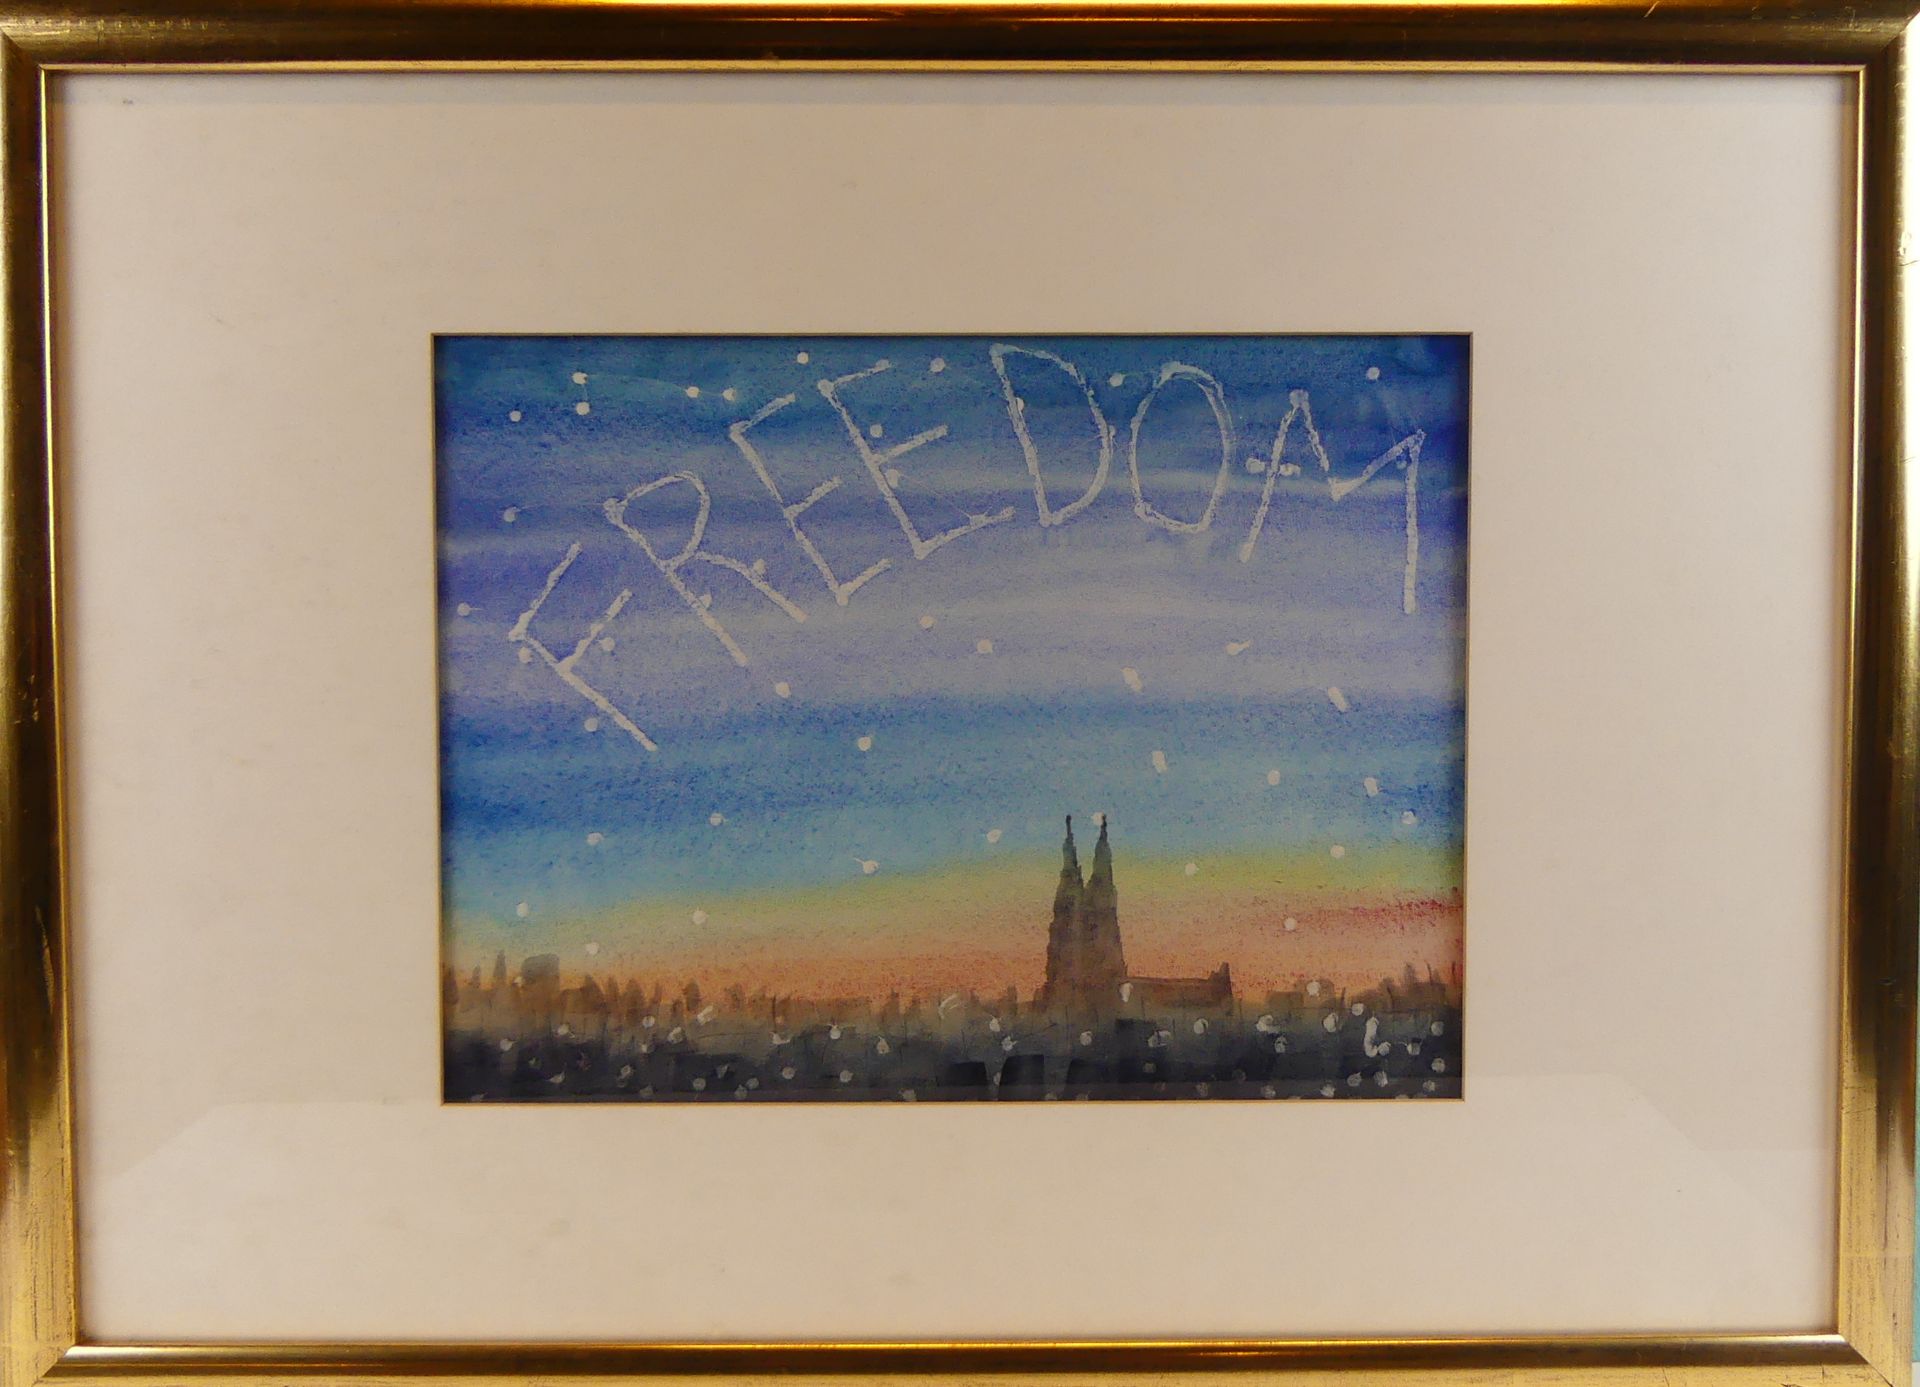 "Freedom", Aquarell mit Kölner Dom, unten rechts signiert, Laufer?, Dat.'80,